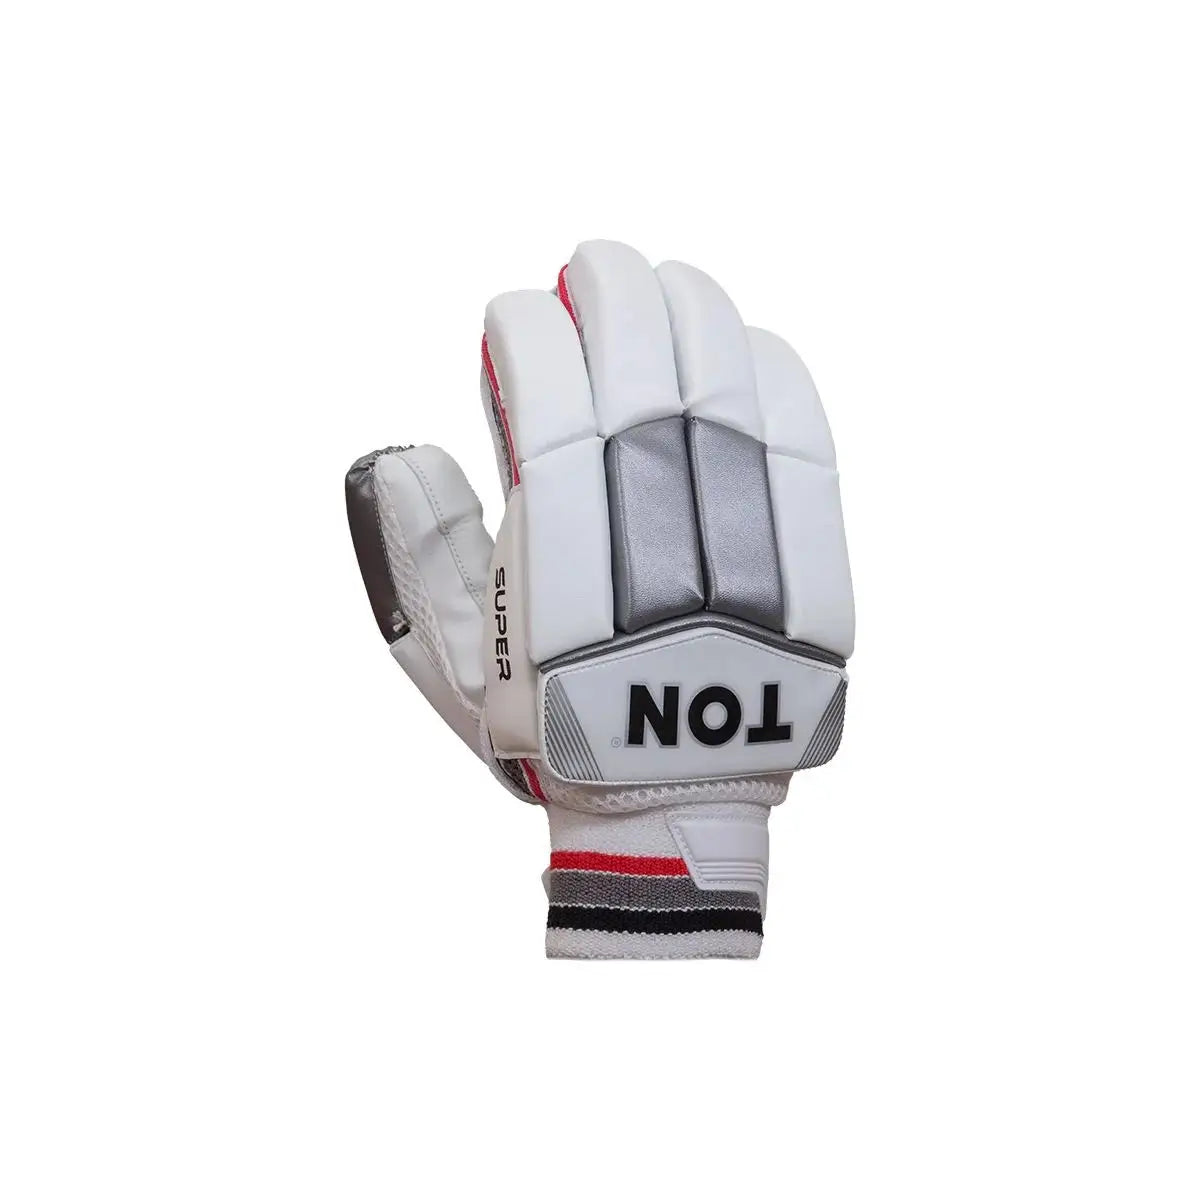 SS TON Super Cricket Batting Gloves- Premium Quality Leather - GLOVE - BATTING